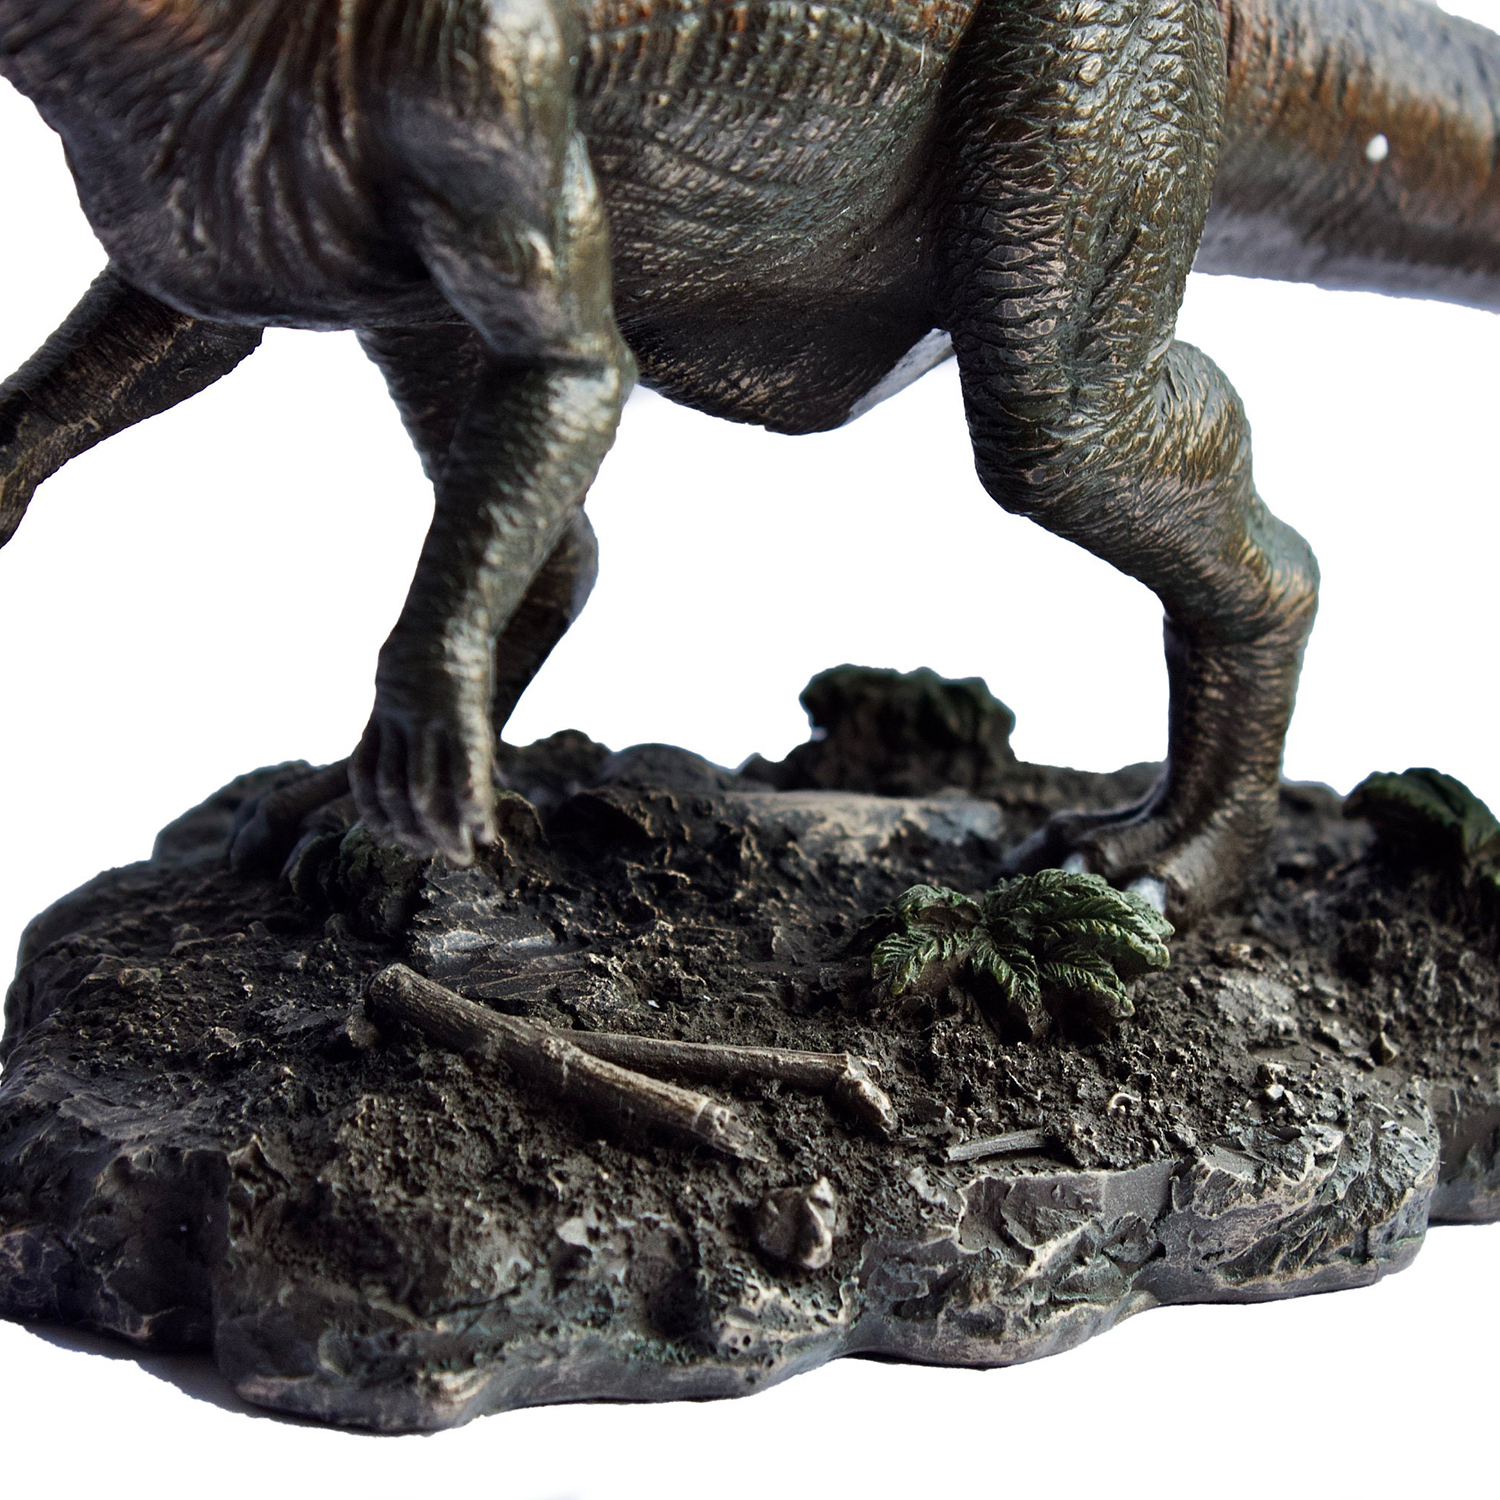 Iguanodon Statue